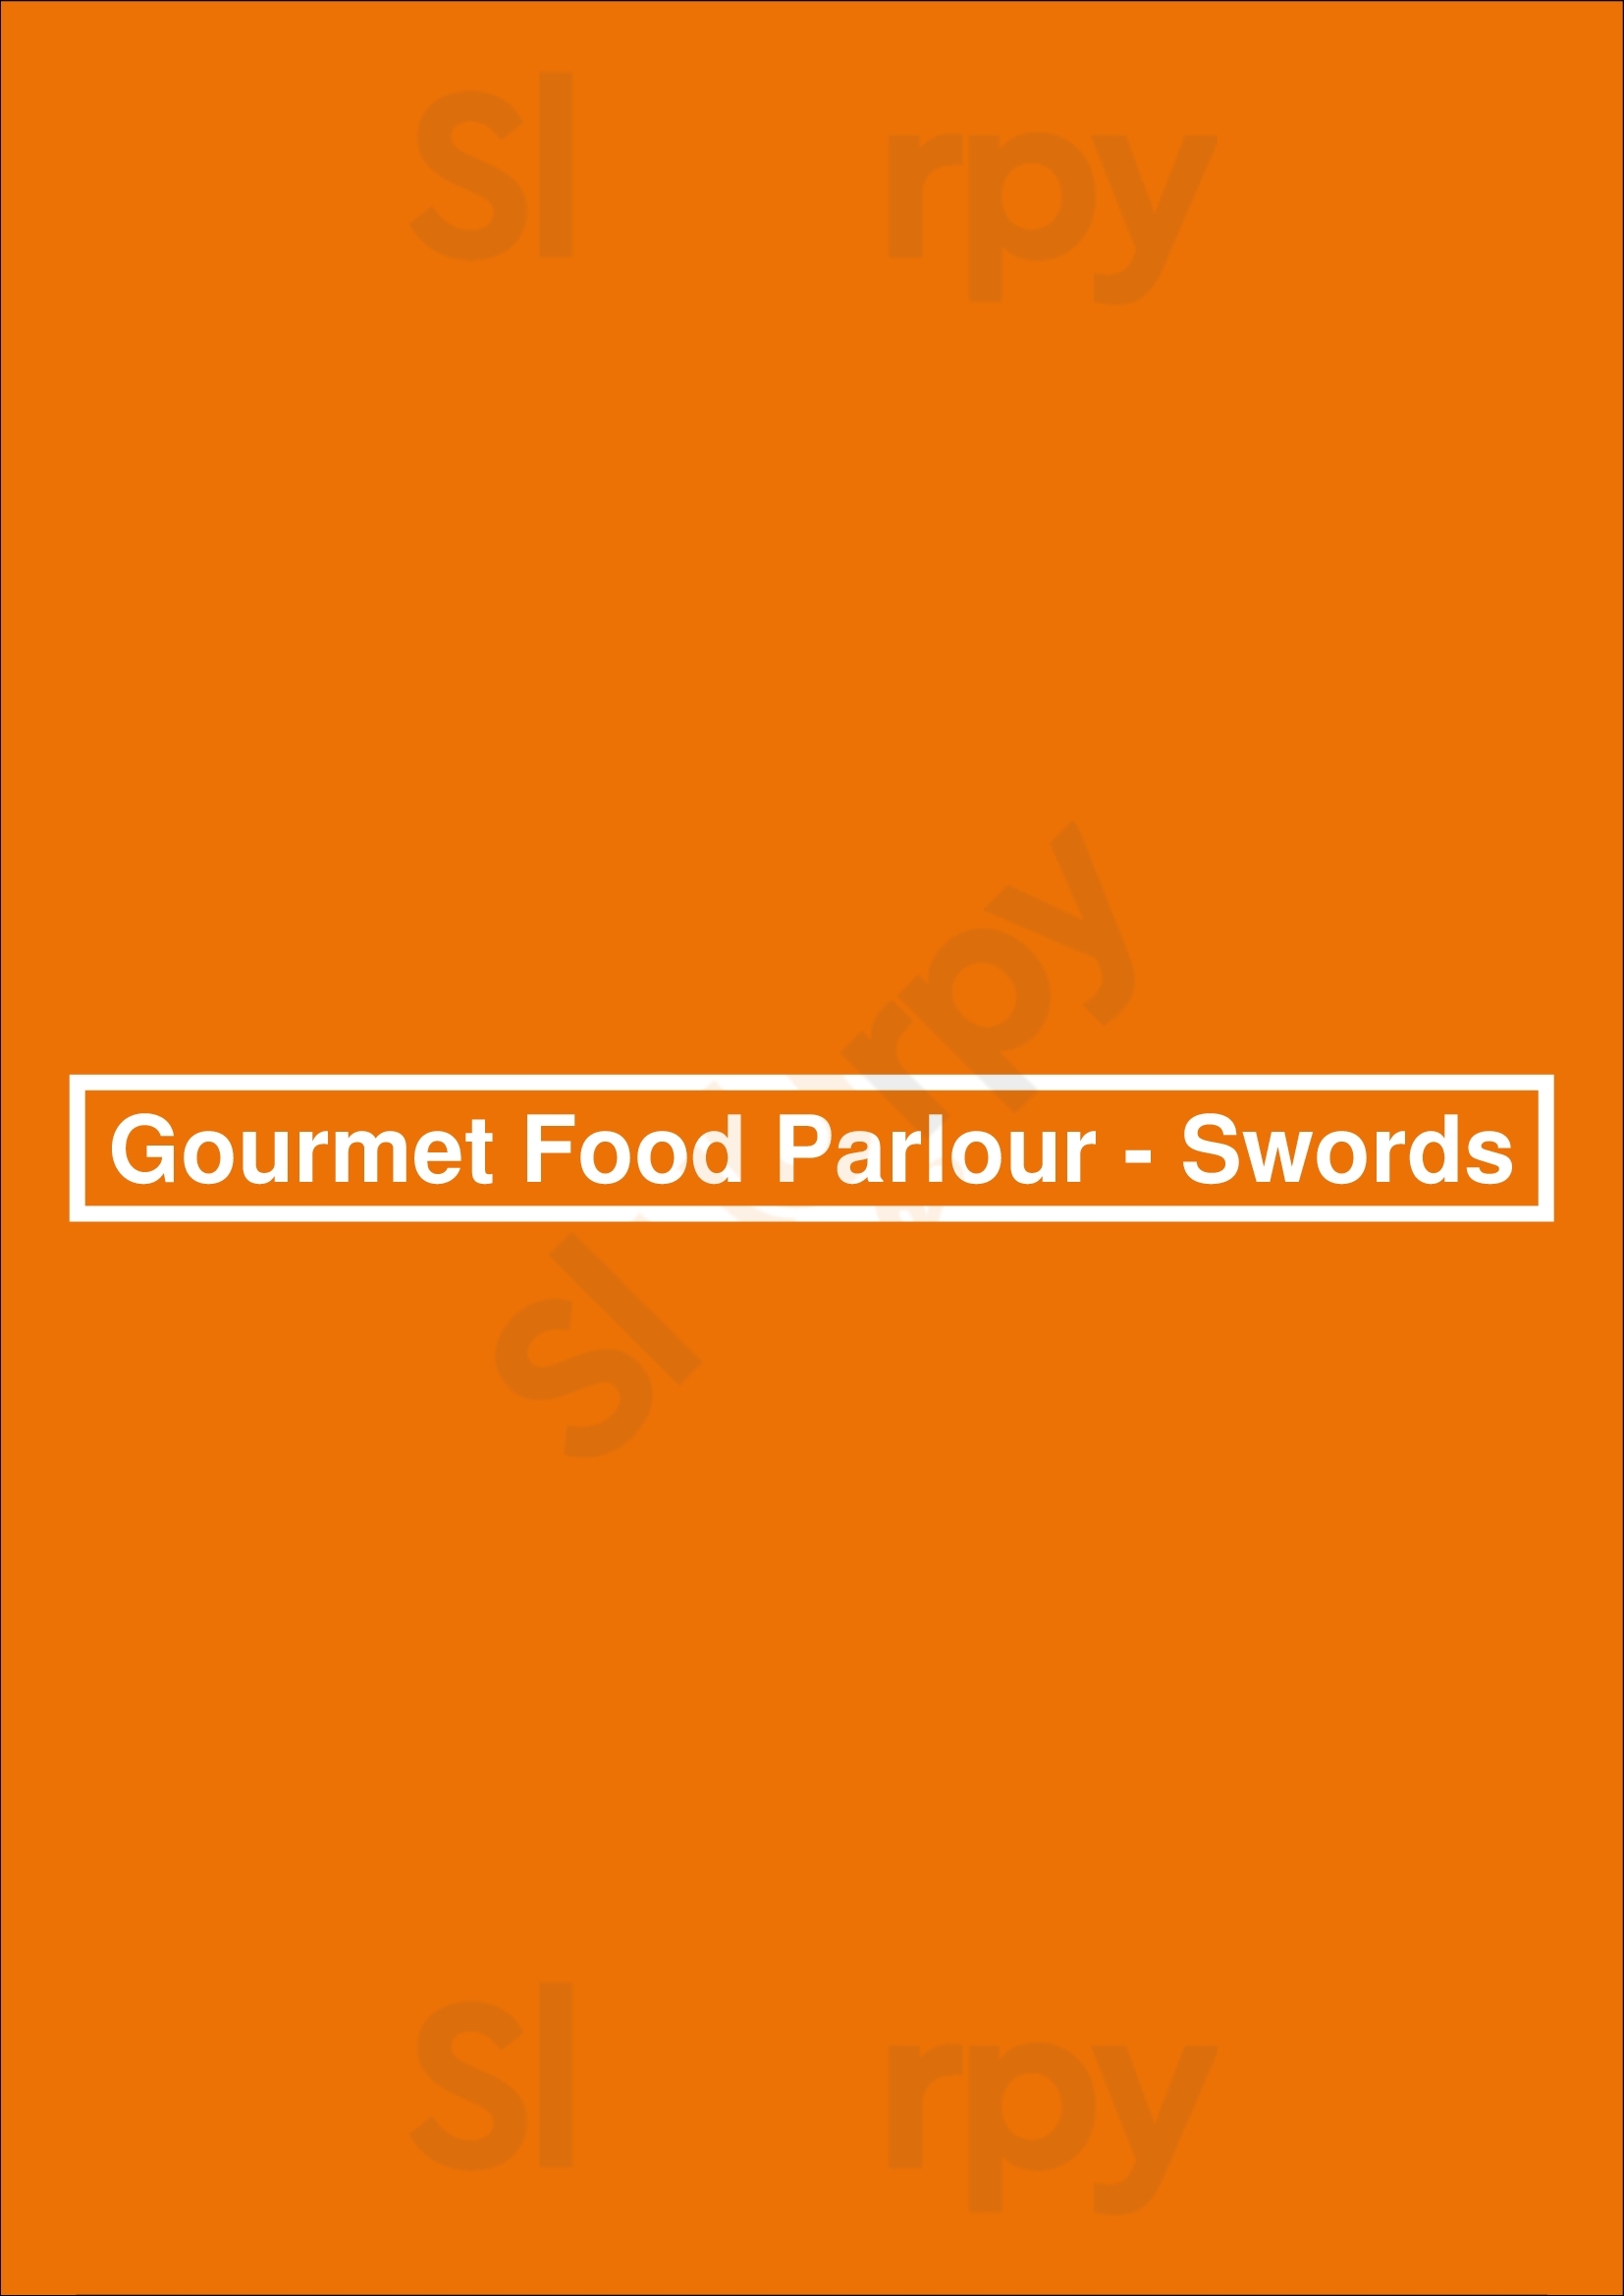 Gourmet Food Parlour - Swords Swords Menu - 1